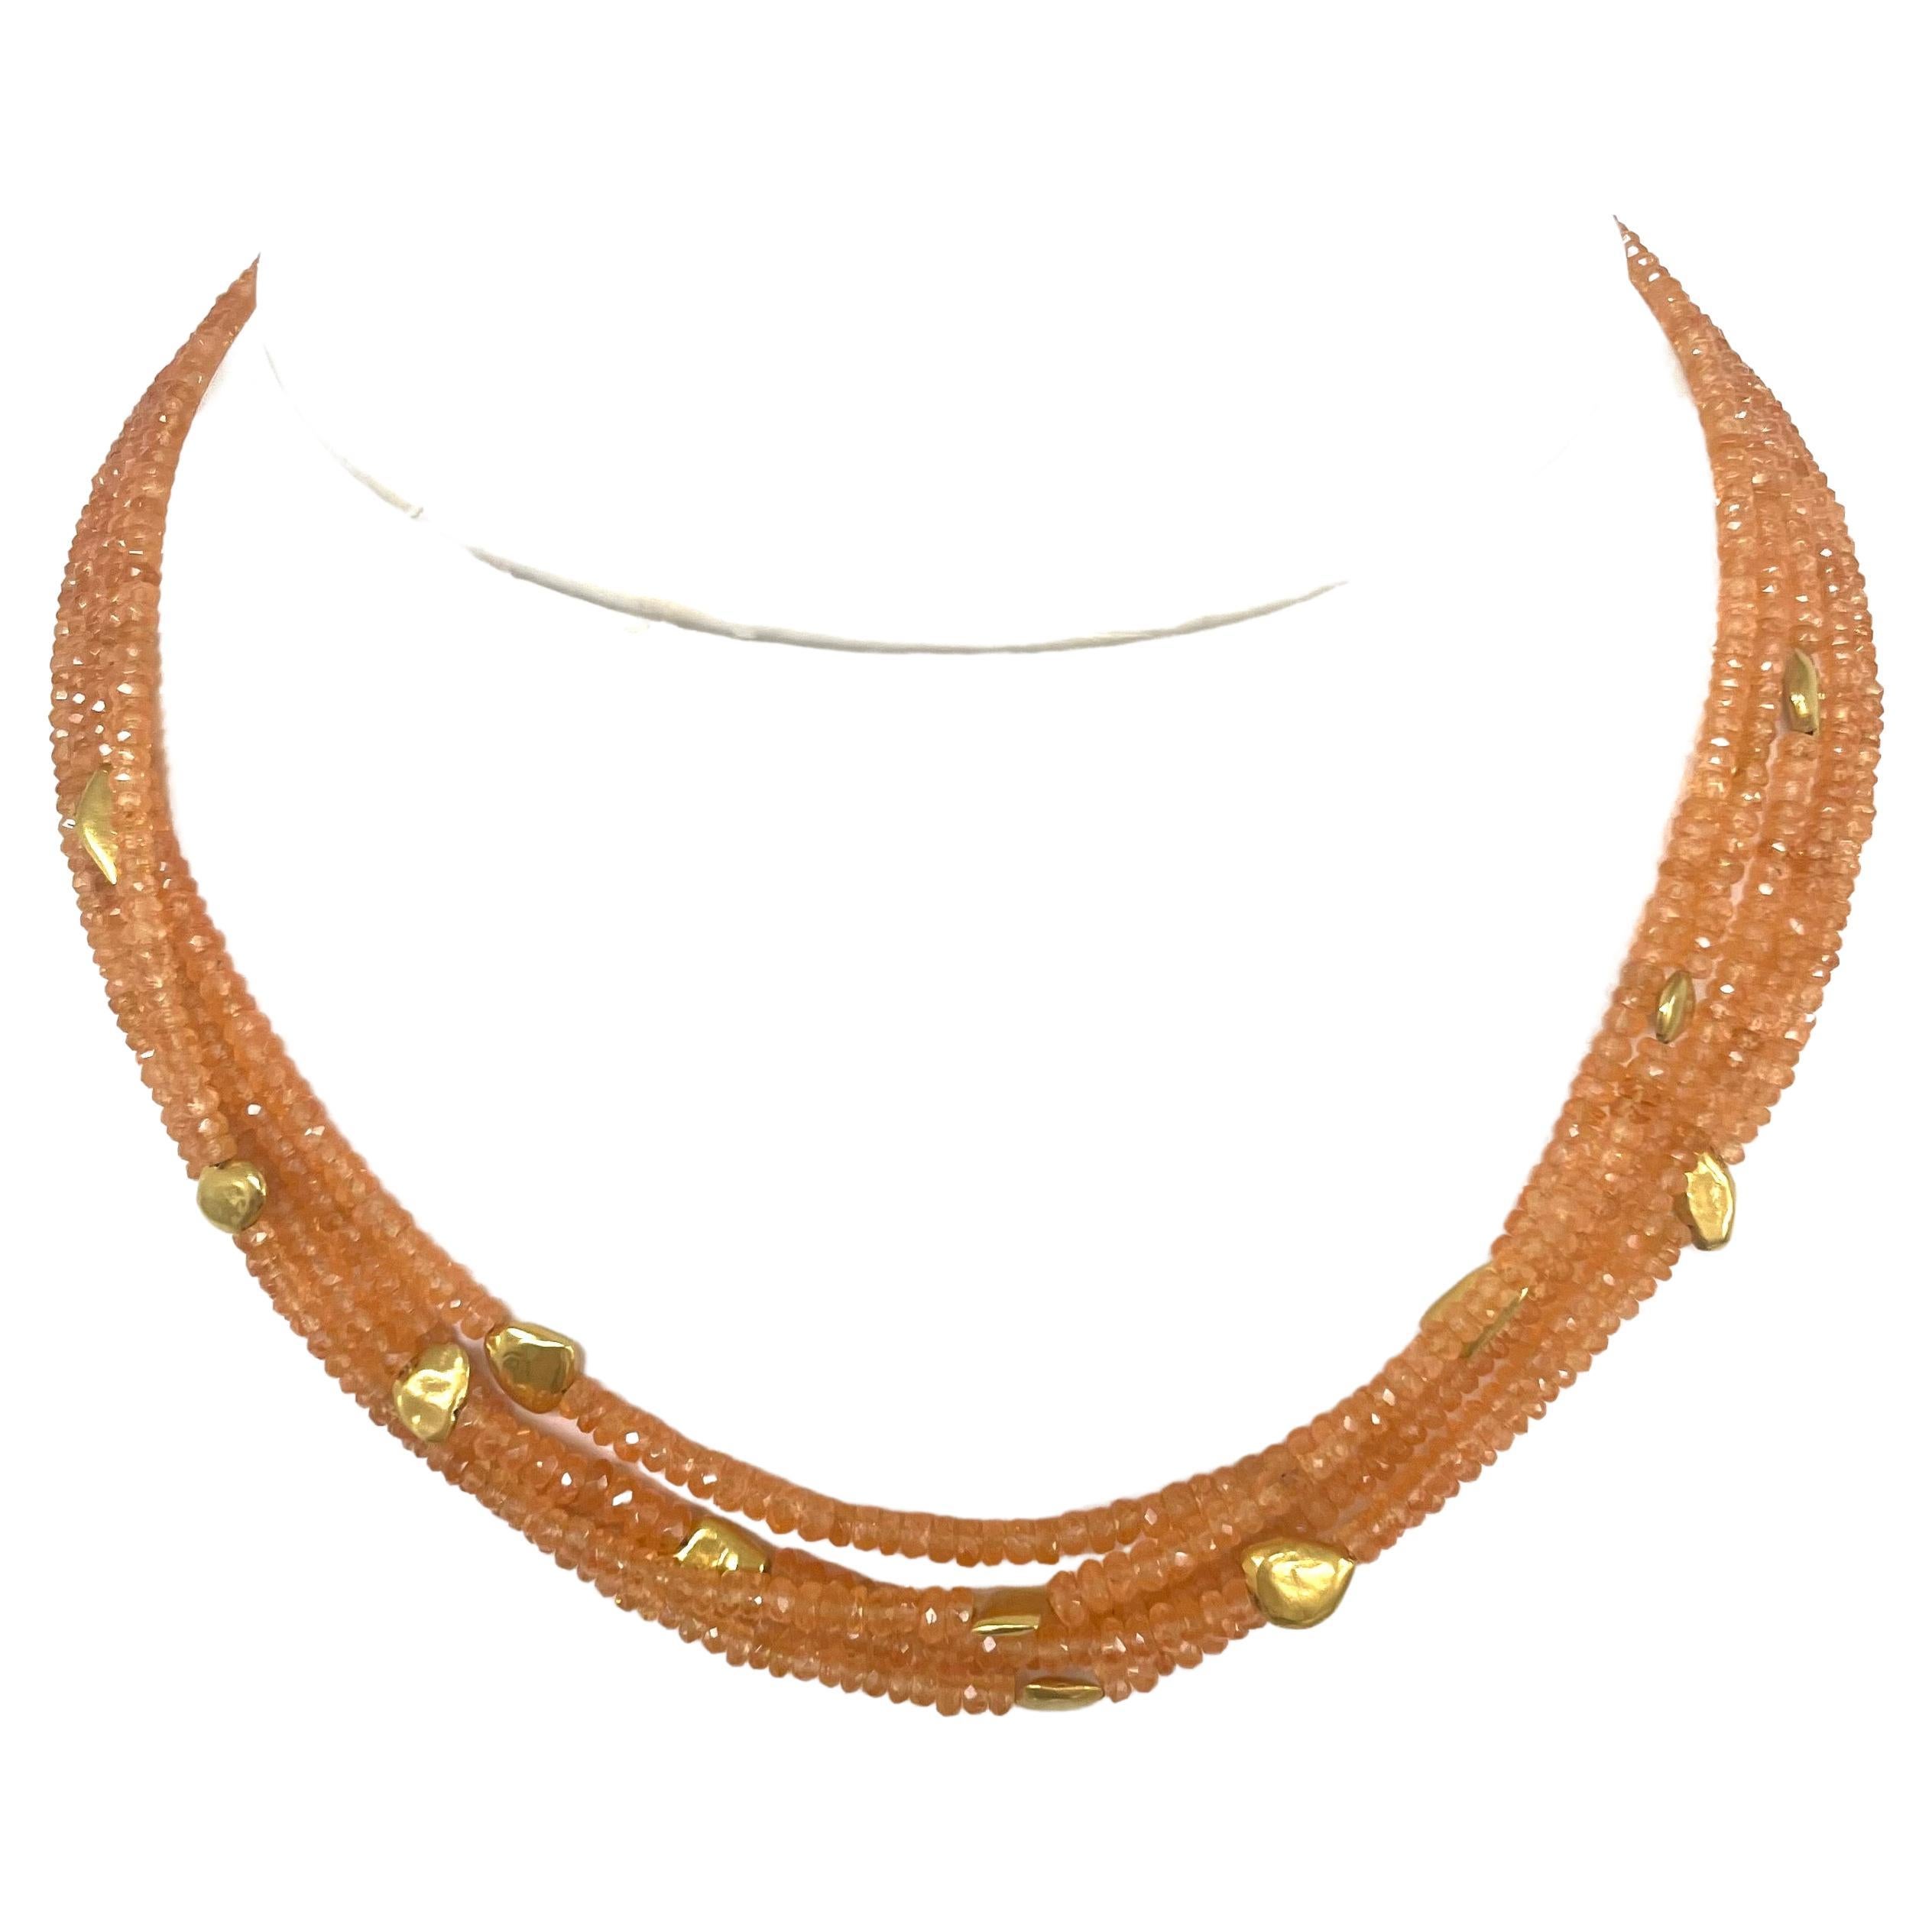  230 Carats Orange Spessartite Necklace with Gold Slices  For Sale 6